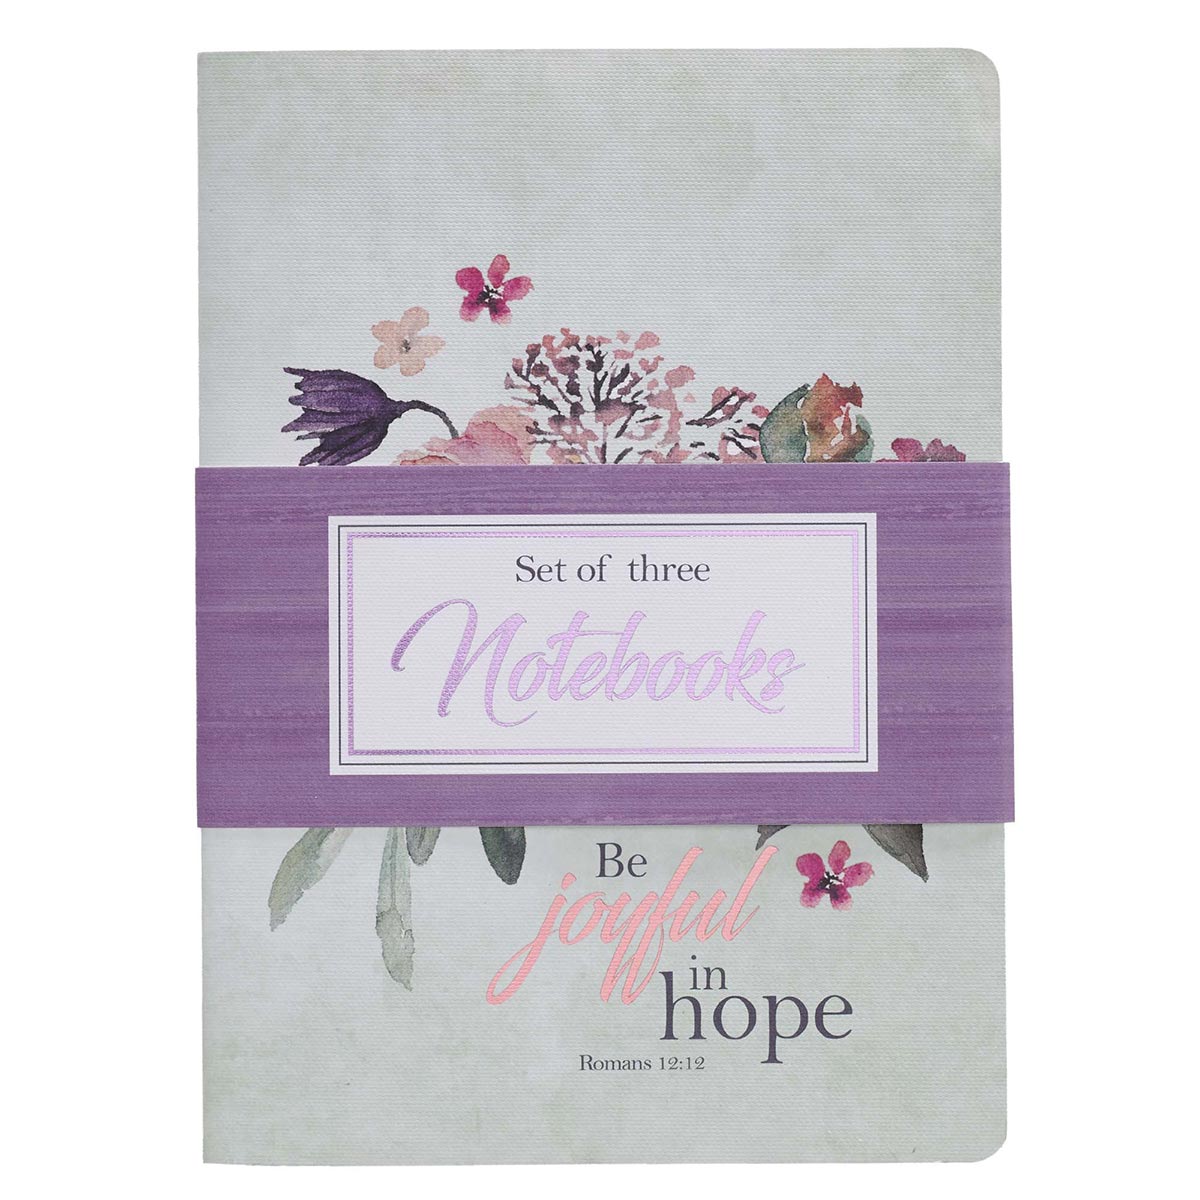 Be Joyful in Hope Large Notebook Set - Romans 12:12 - image 1 of 6